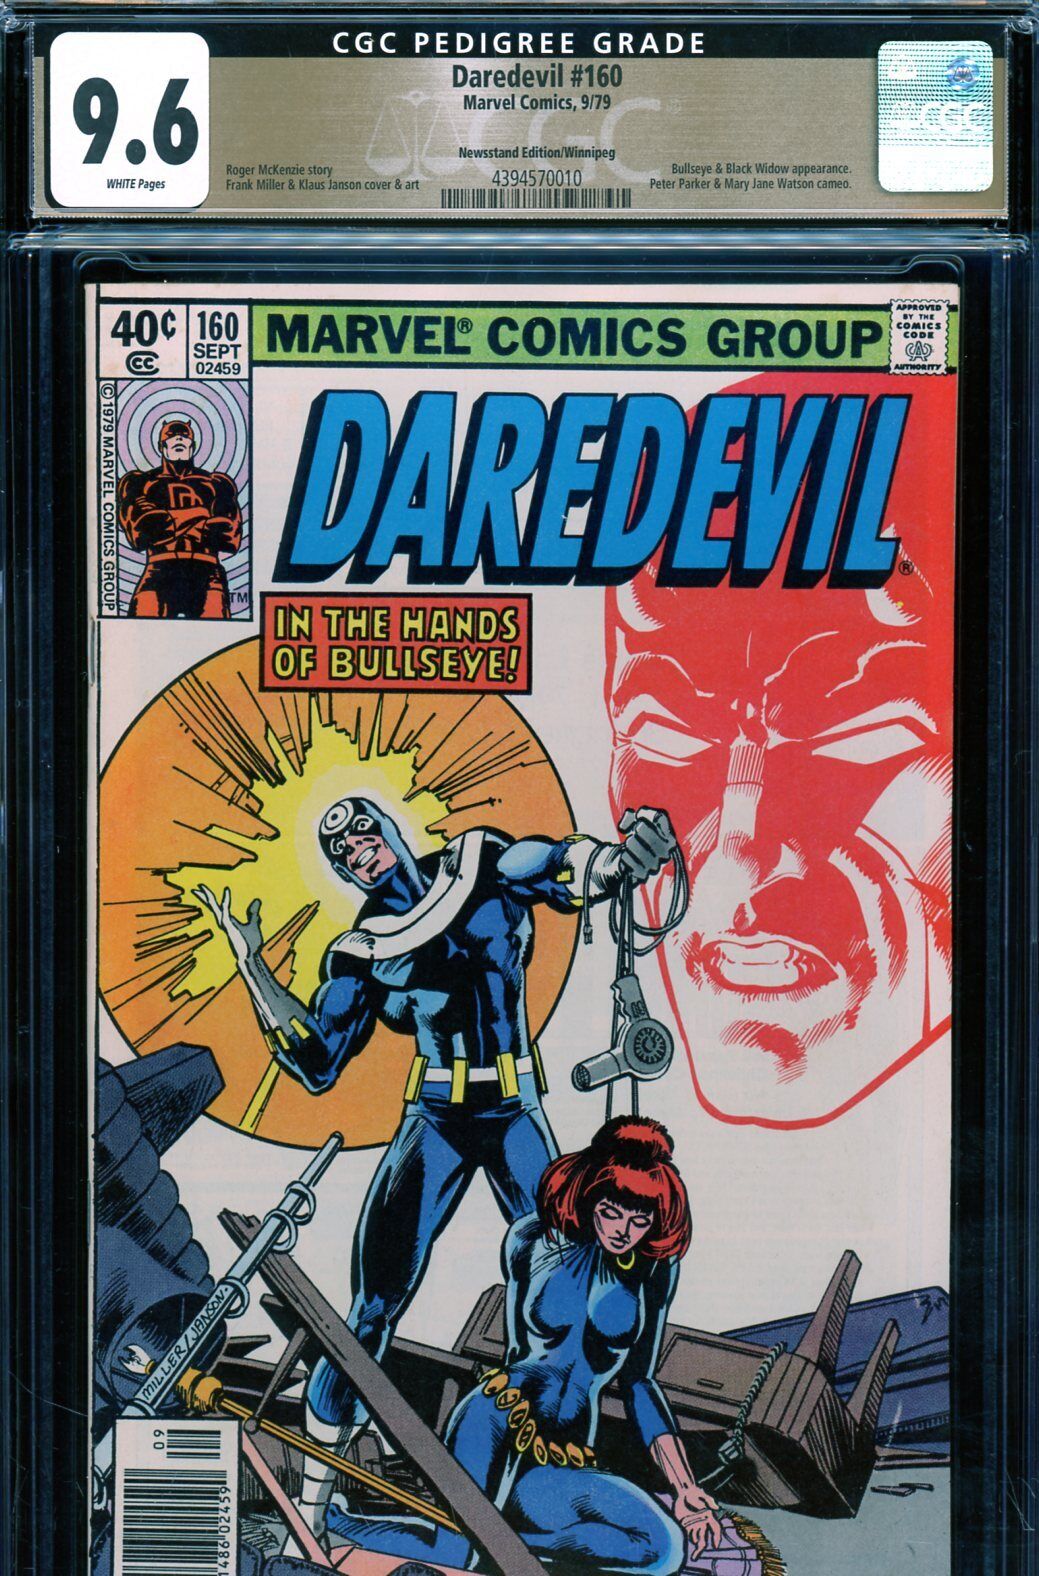 Daredevil #160 CGC 9.6 - PEDIGREE NEWSSTAND EDITION - Bullseye/Black WIdow story